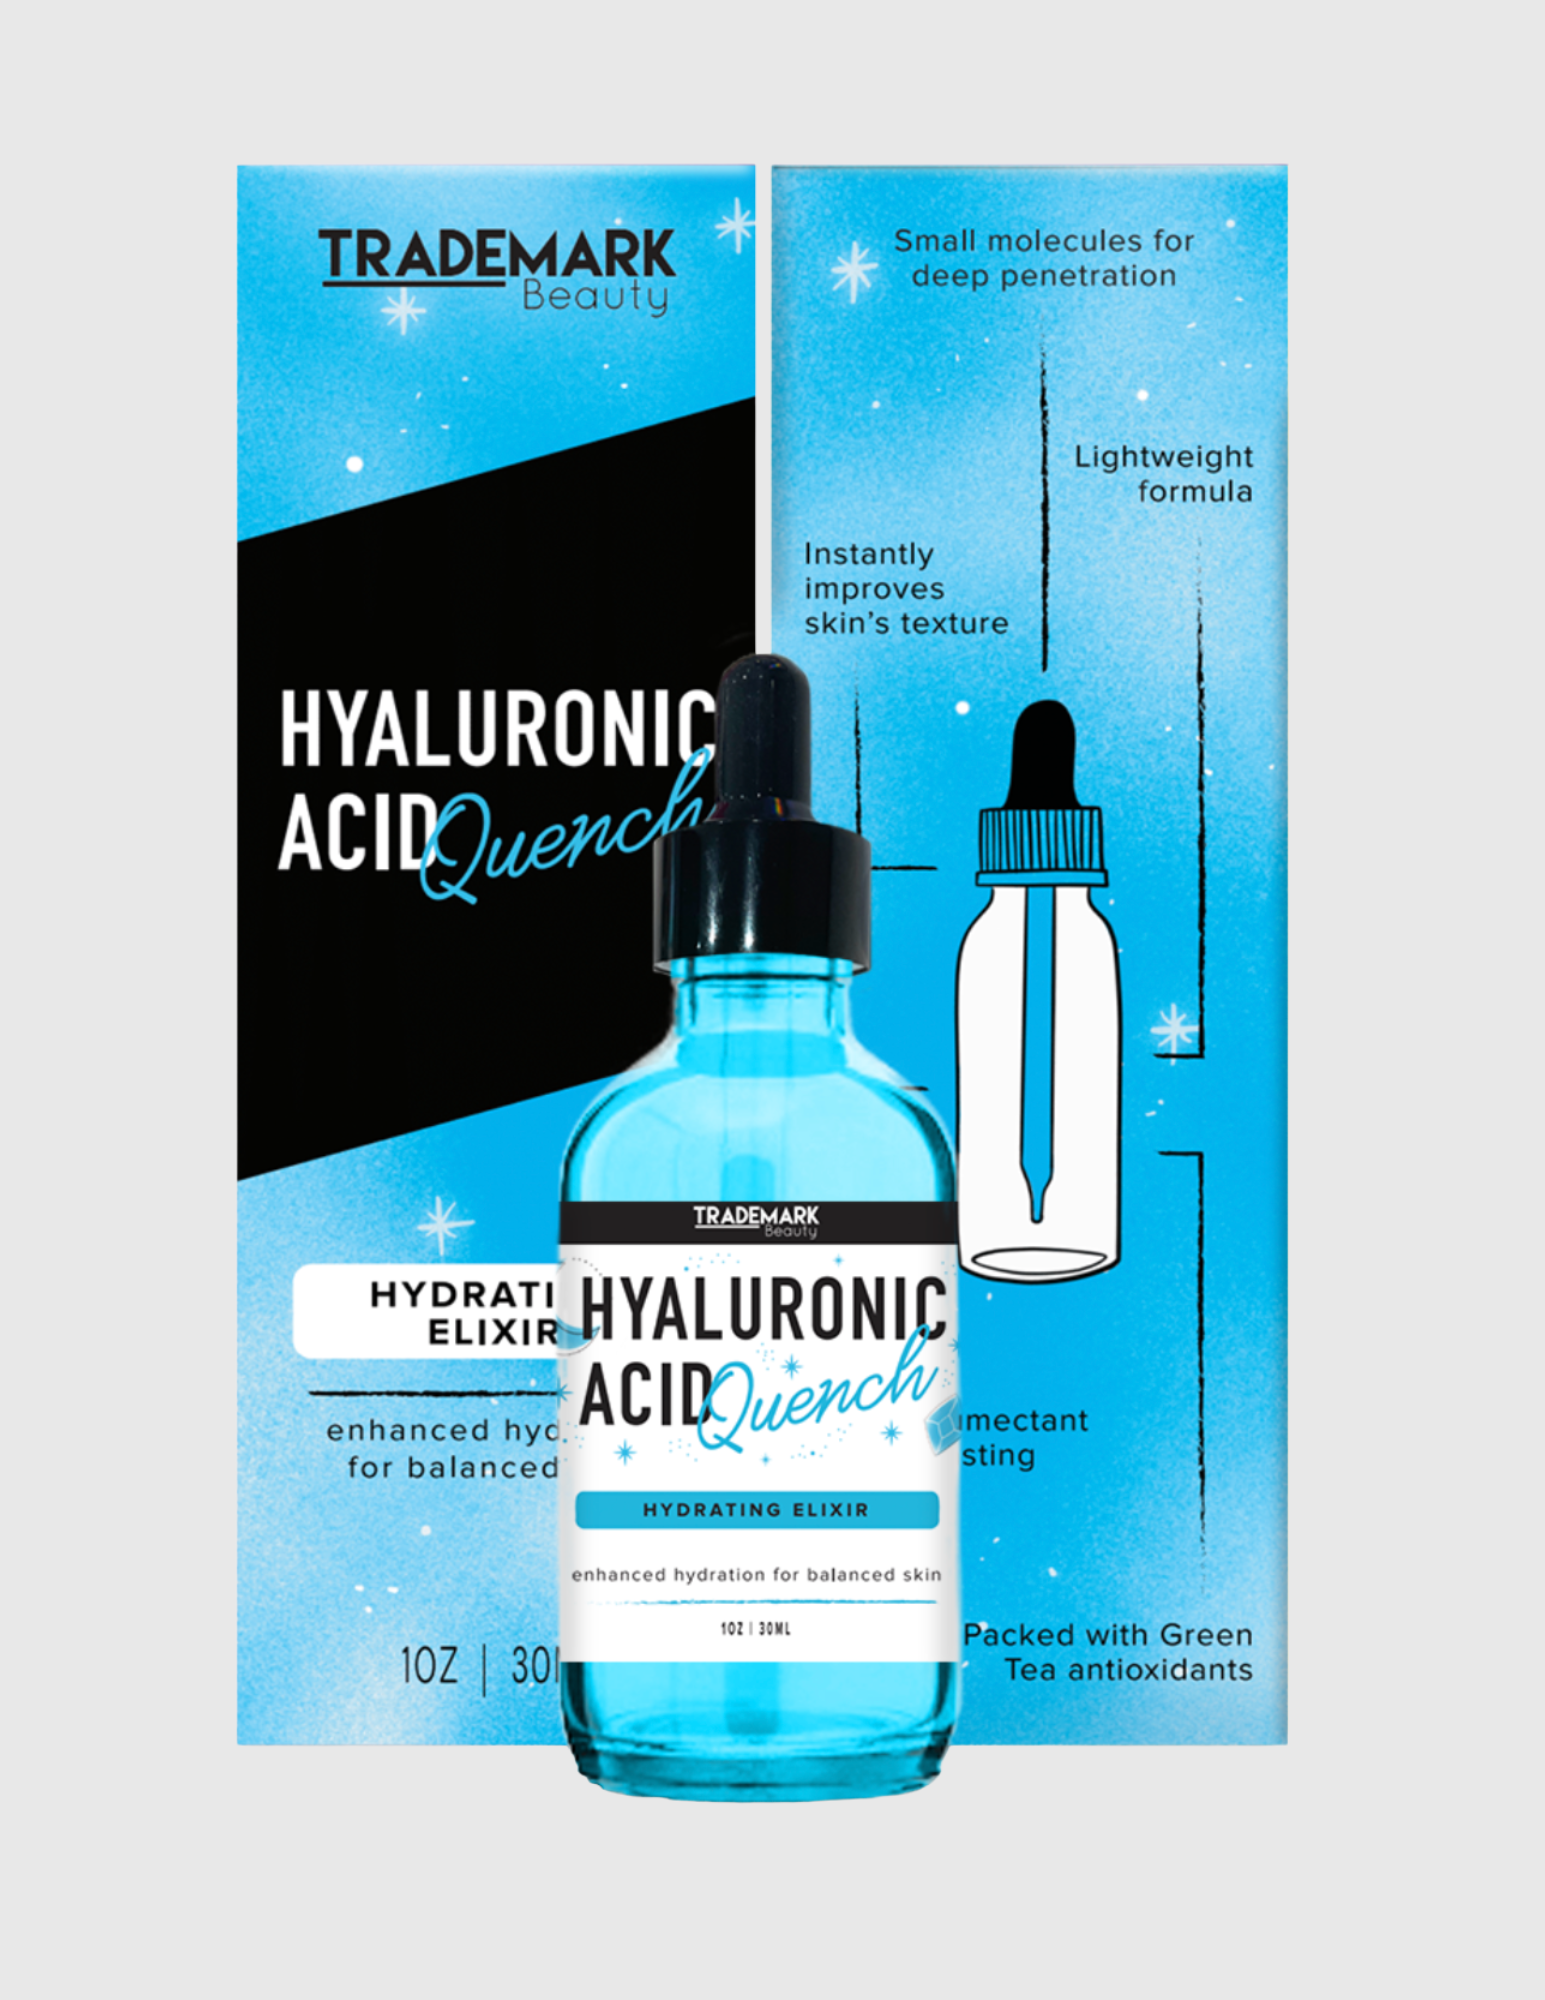 Hyaluronic Acid Daily Elixir Serum - Trademark Beauty